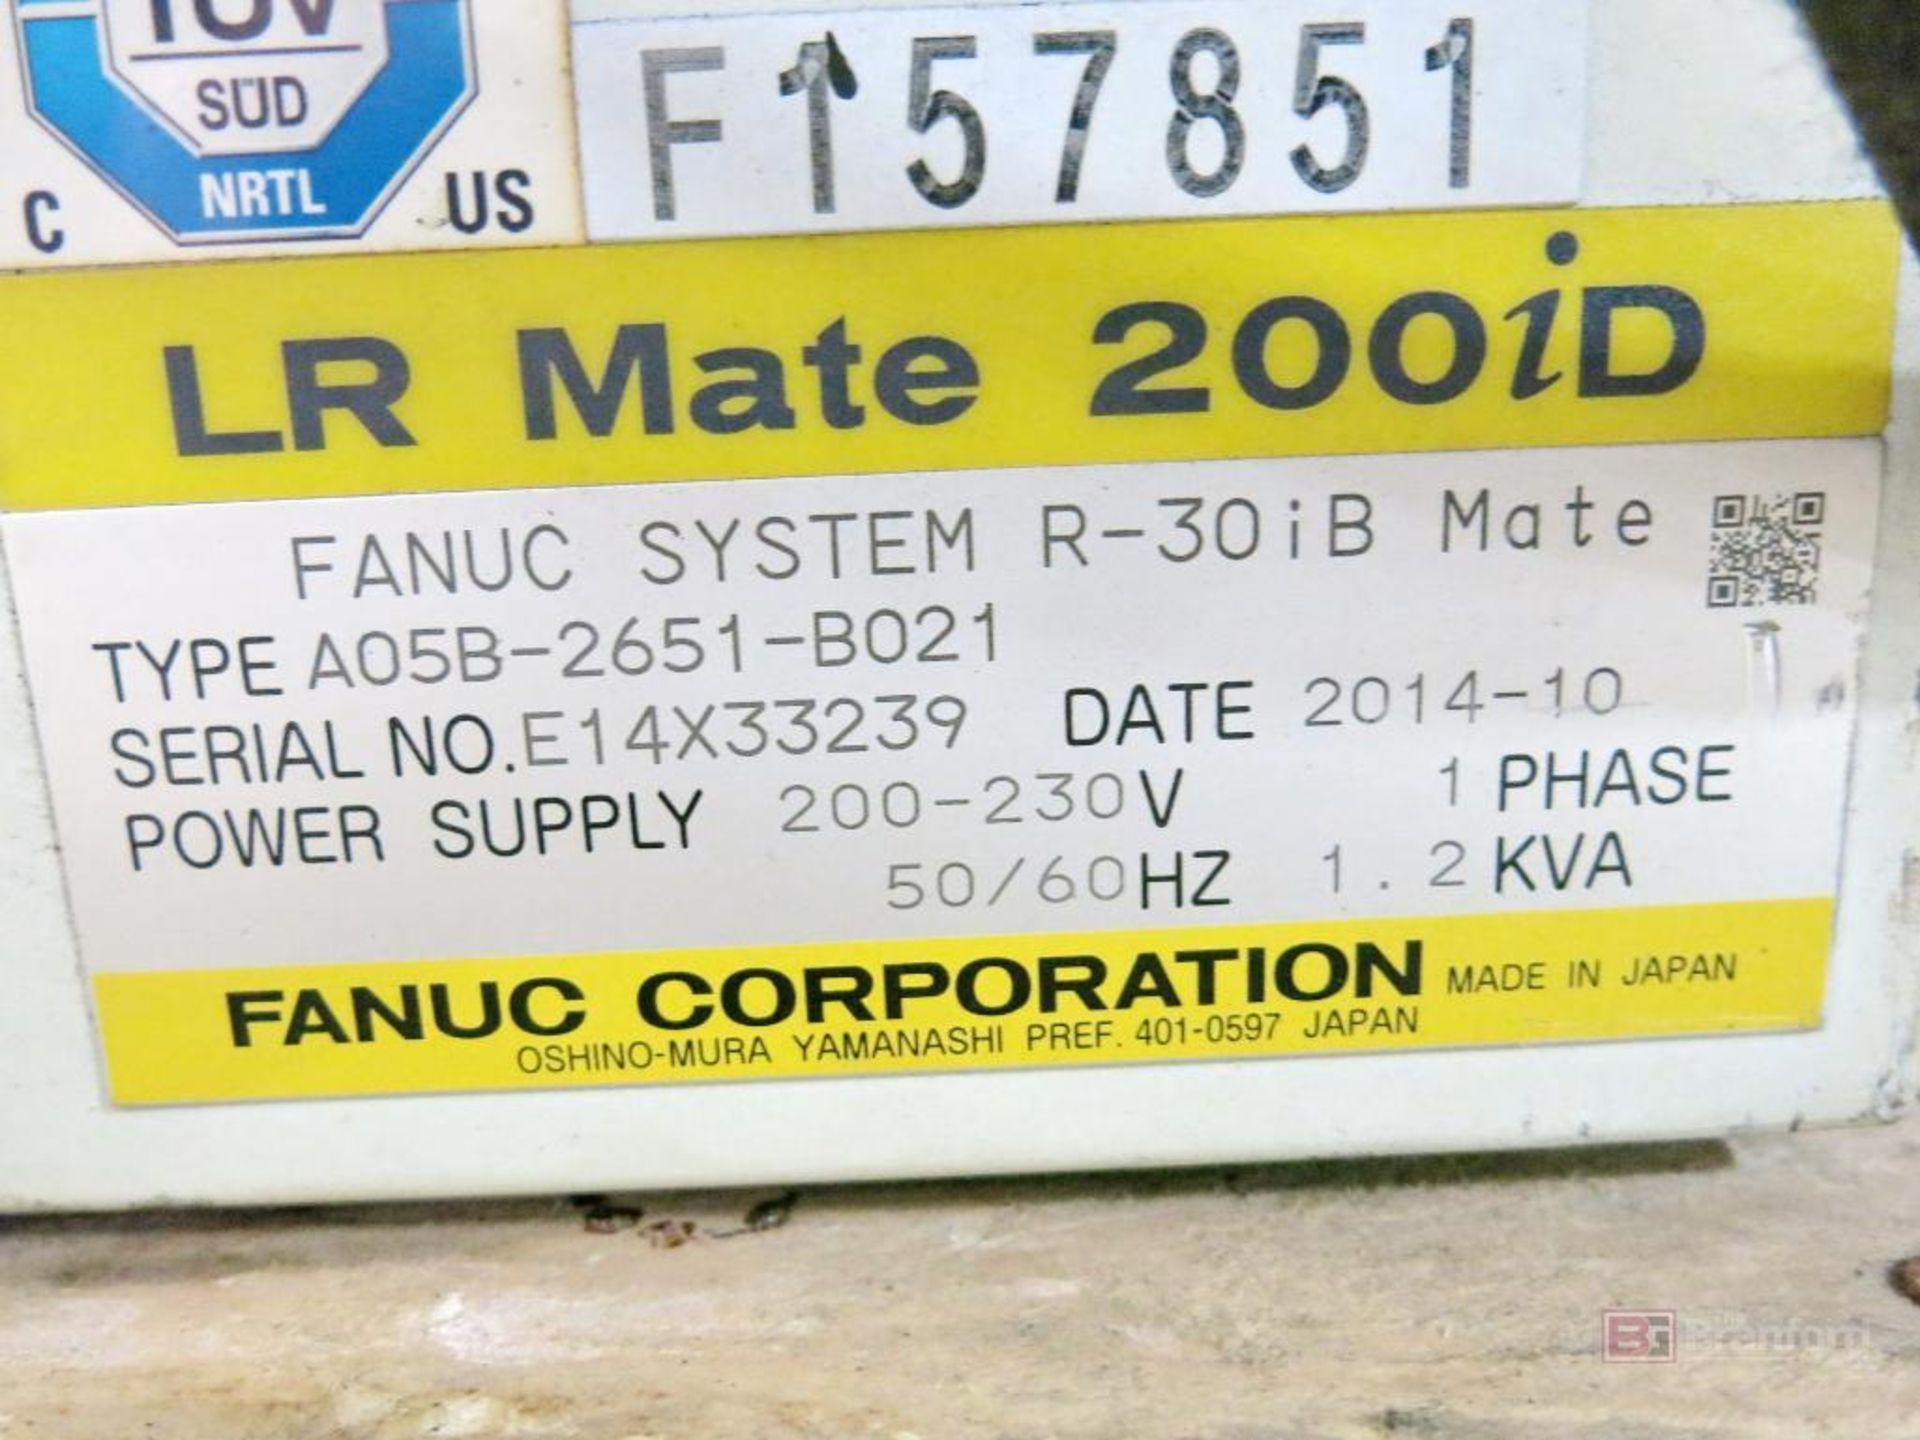 Fanuc Model LR MATE-200ID Robot - Image 5 of 5